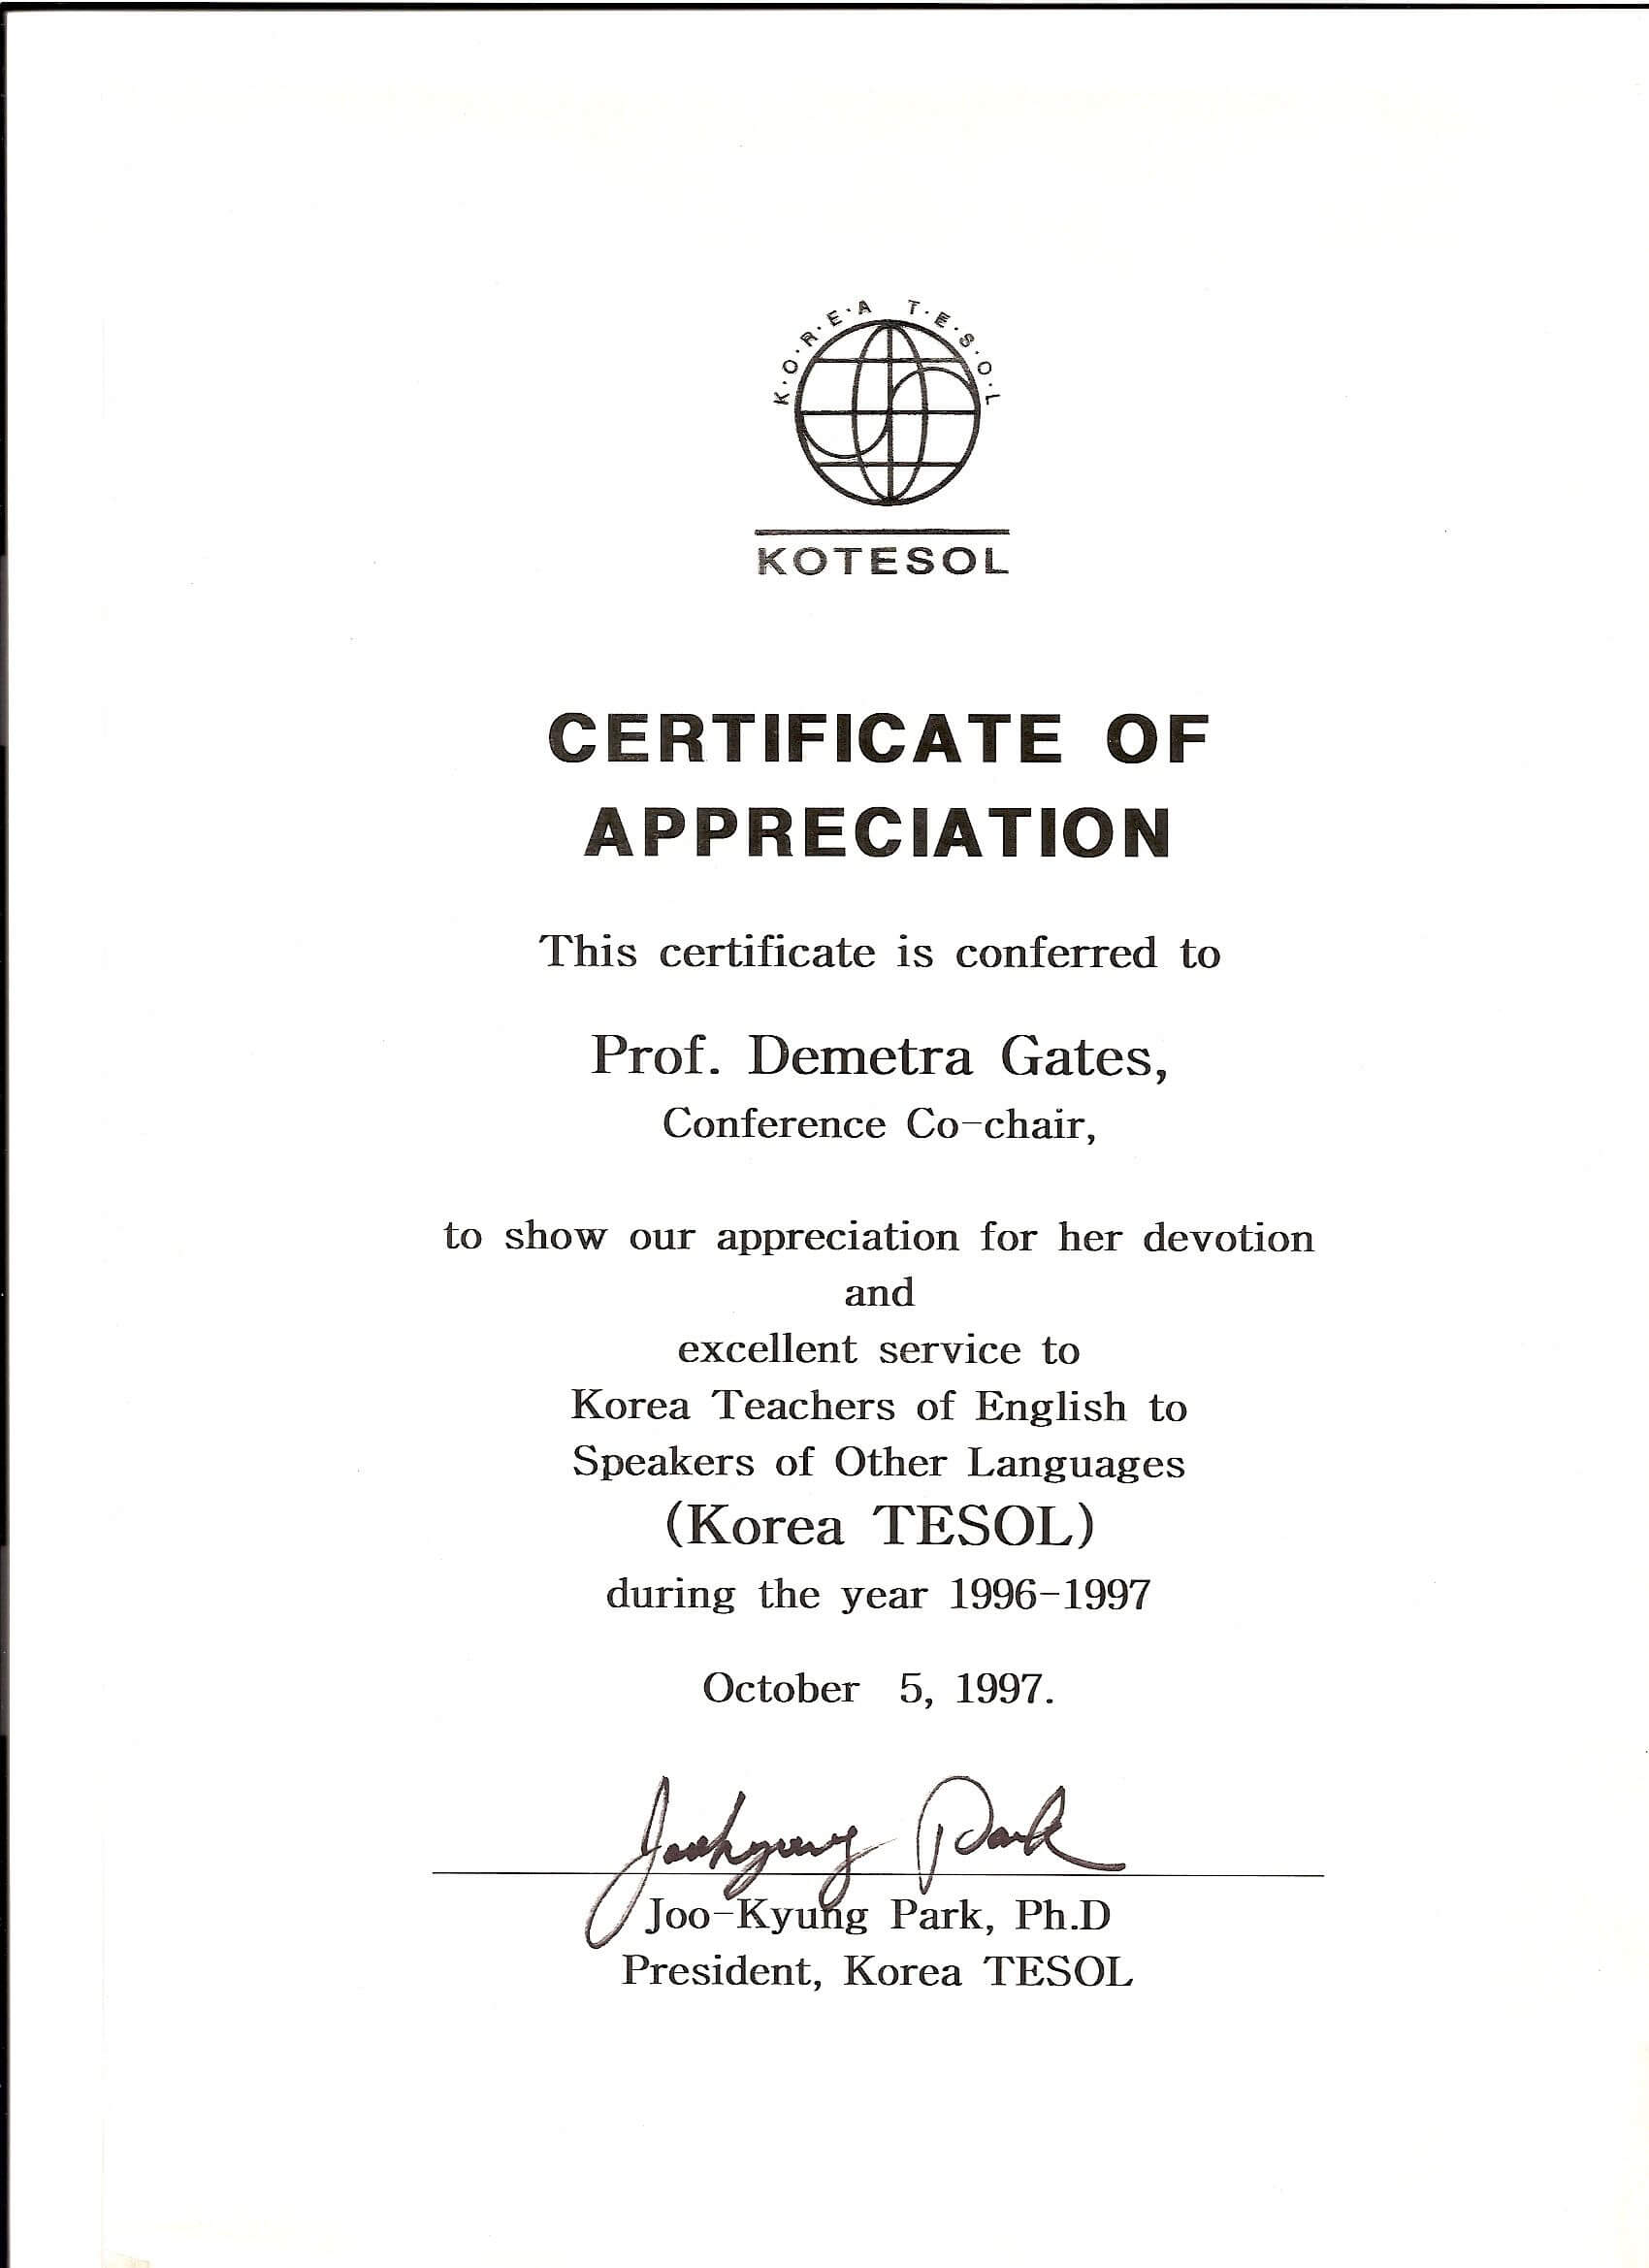 Kotesol Presidential Certificate Of Appreciation (1997 Within University Graduation Certificate Template